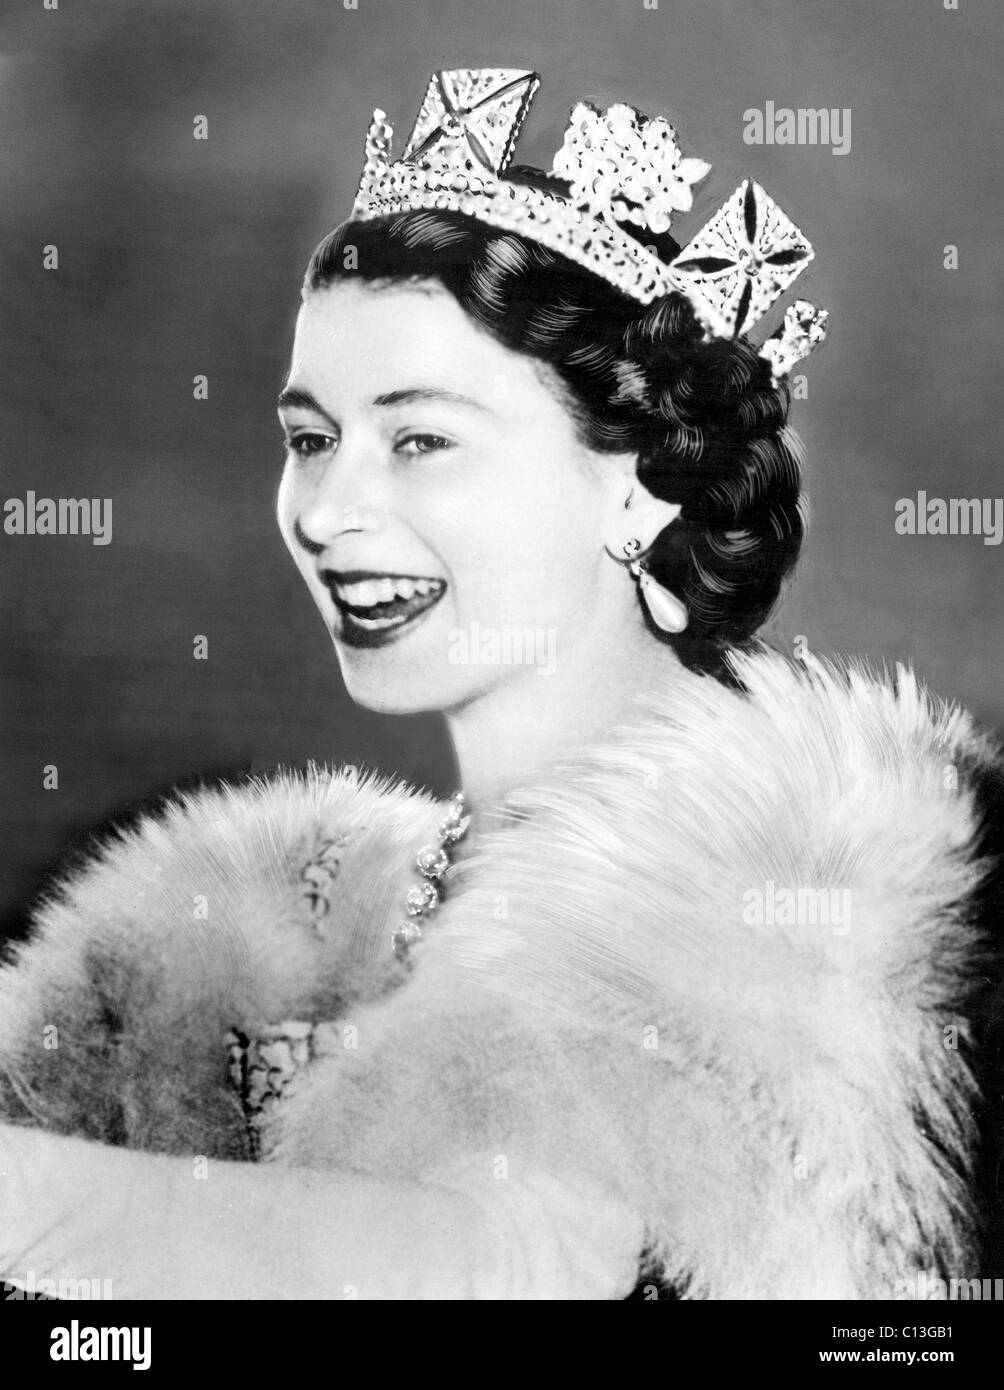 QUEEN ELIZABETH II, from 'A Queen is Crowned', coronation on June 2, 1953 Stock Photo